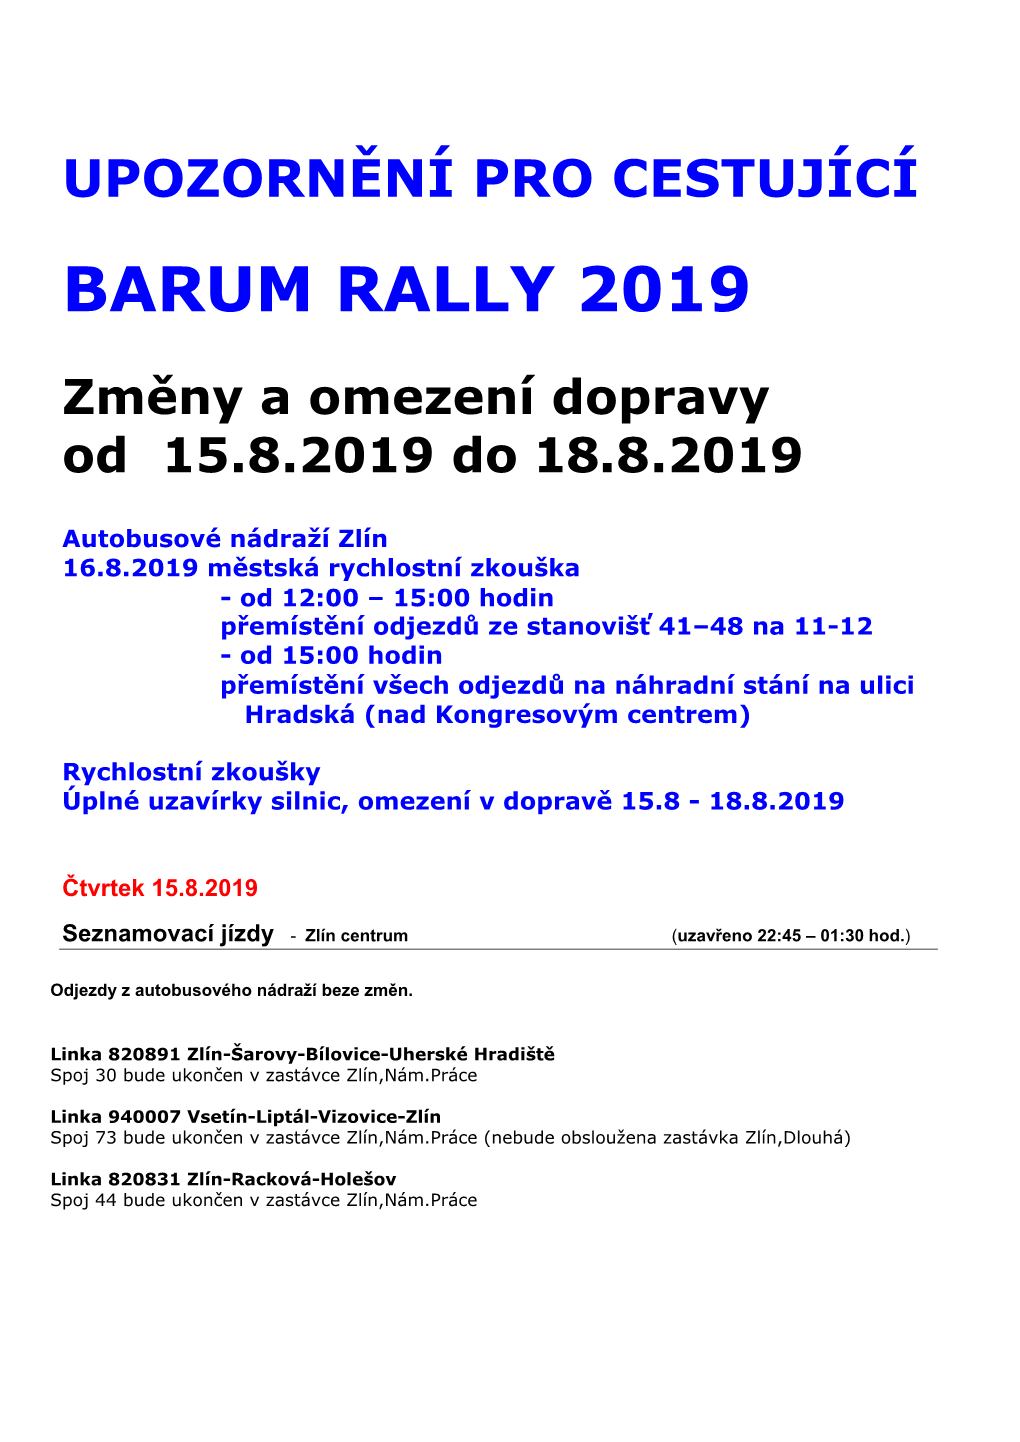 Barum Rally 2019